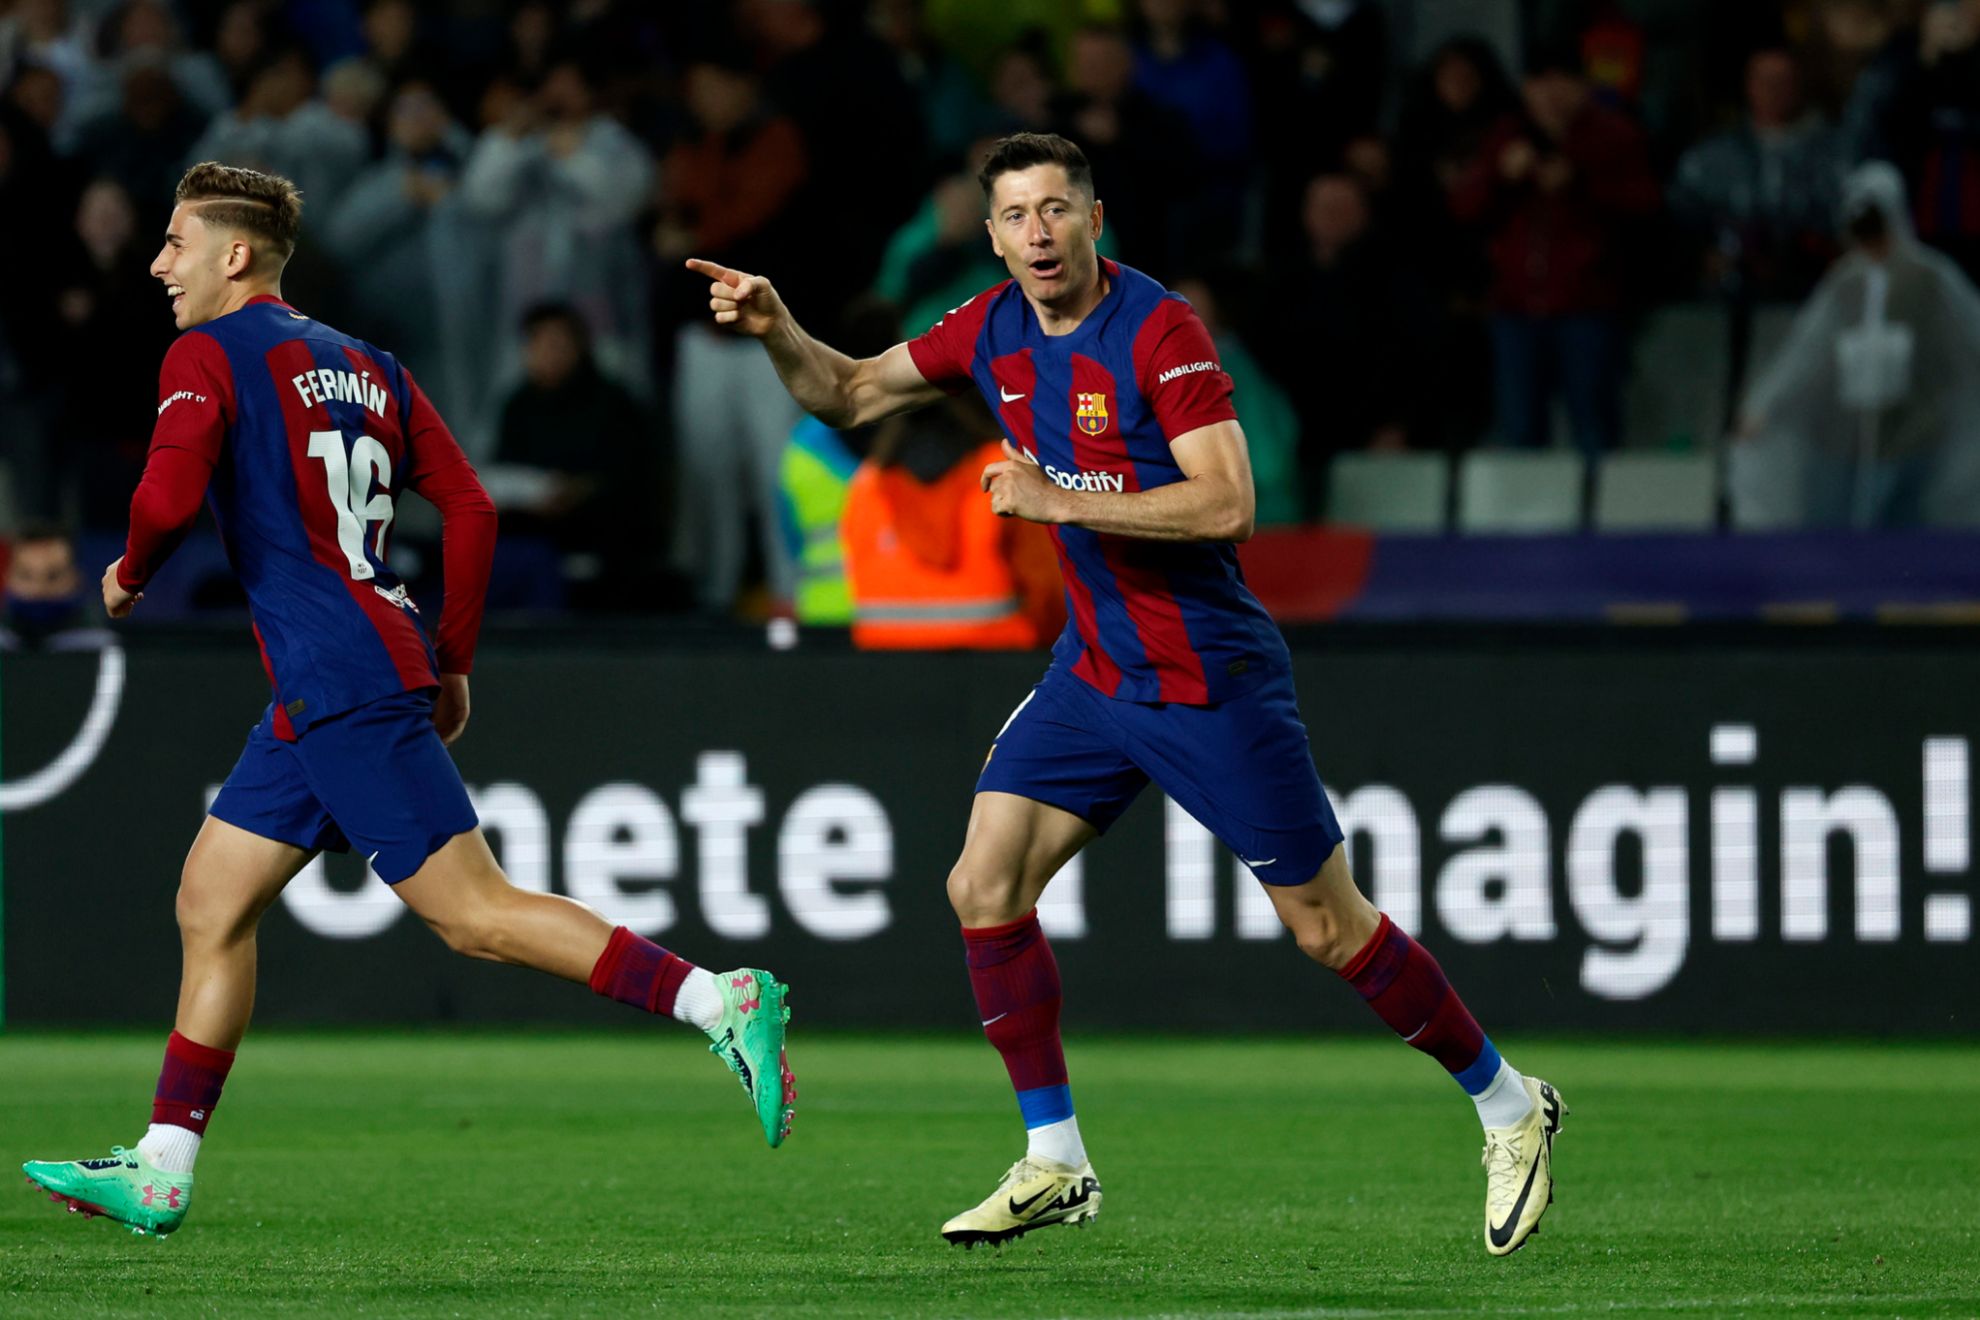 Barcelona move into second place as Lewandowski hat-trick sinks Valencia